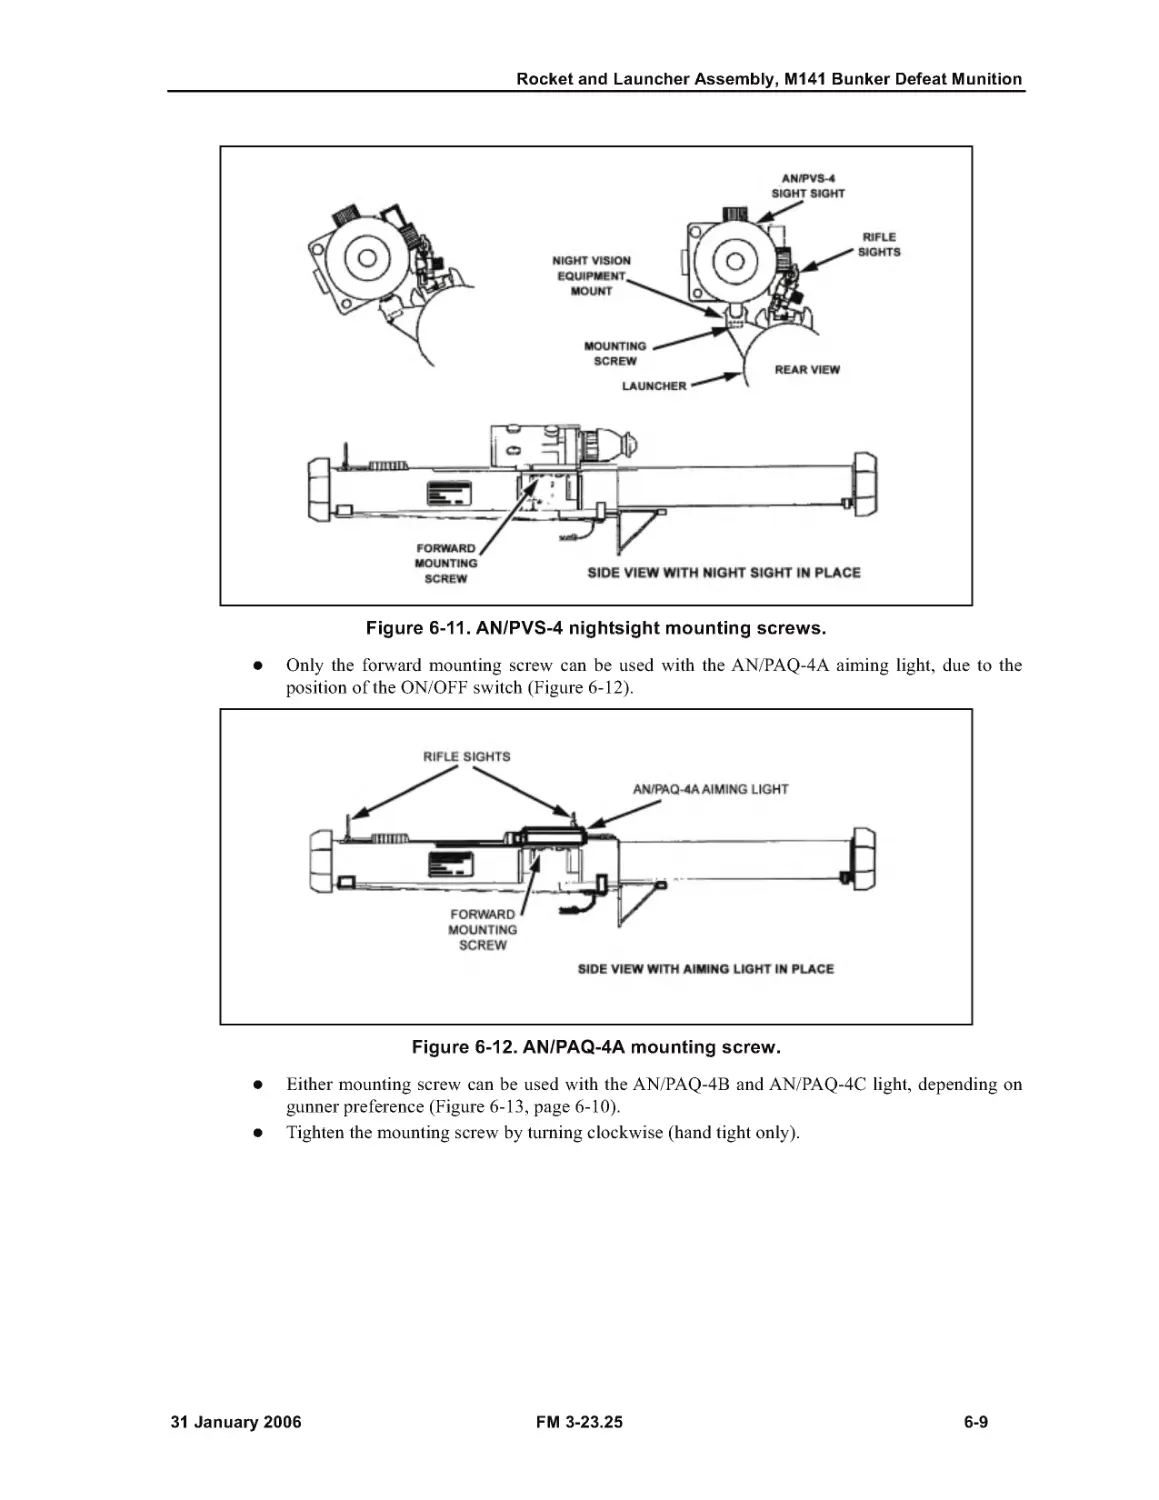 Figure 6-11. AN/PVS-4 nightsight mounting screws.
Figure 6-12. AN/PAQ-4A mounting screw.